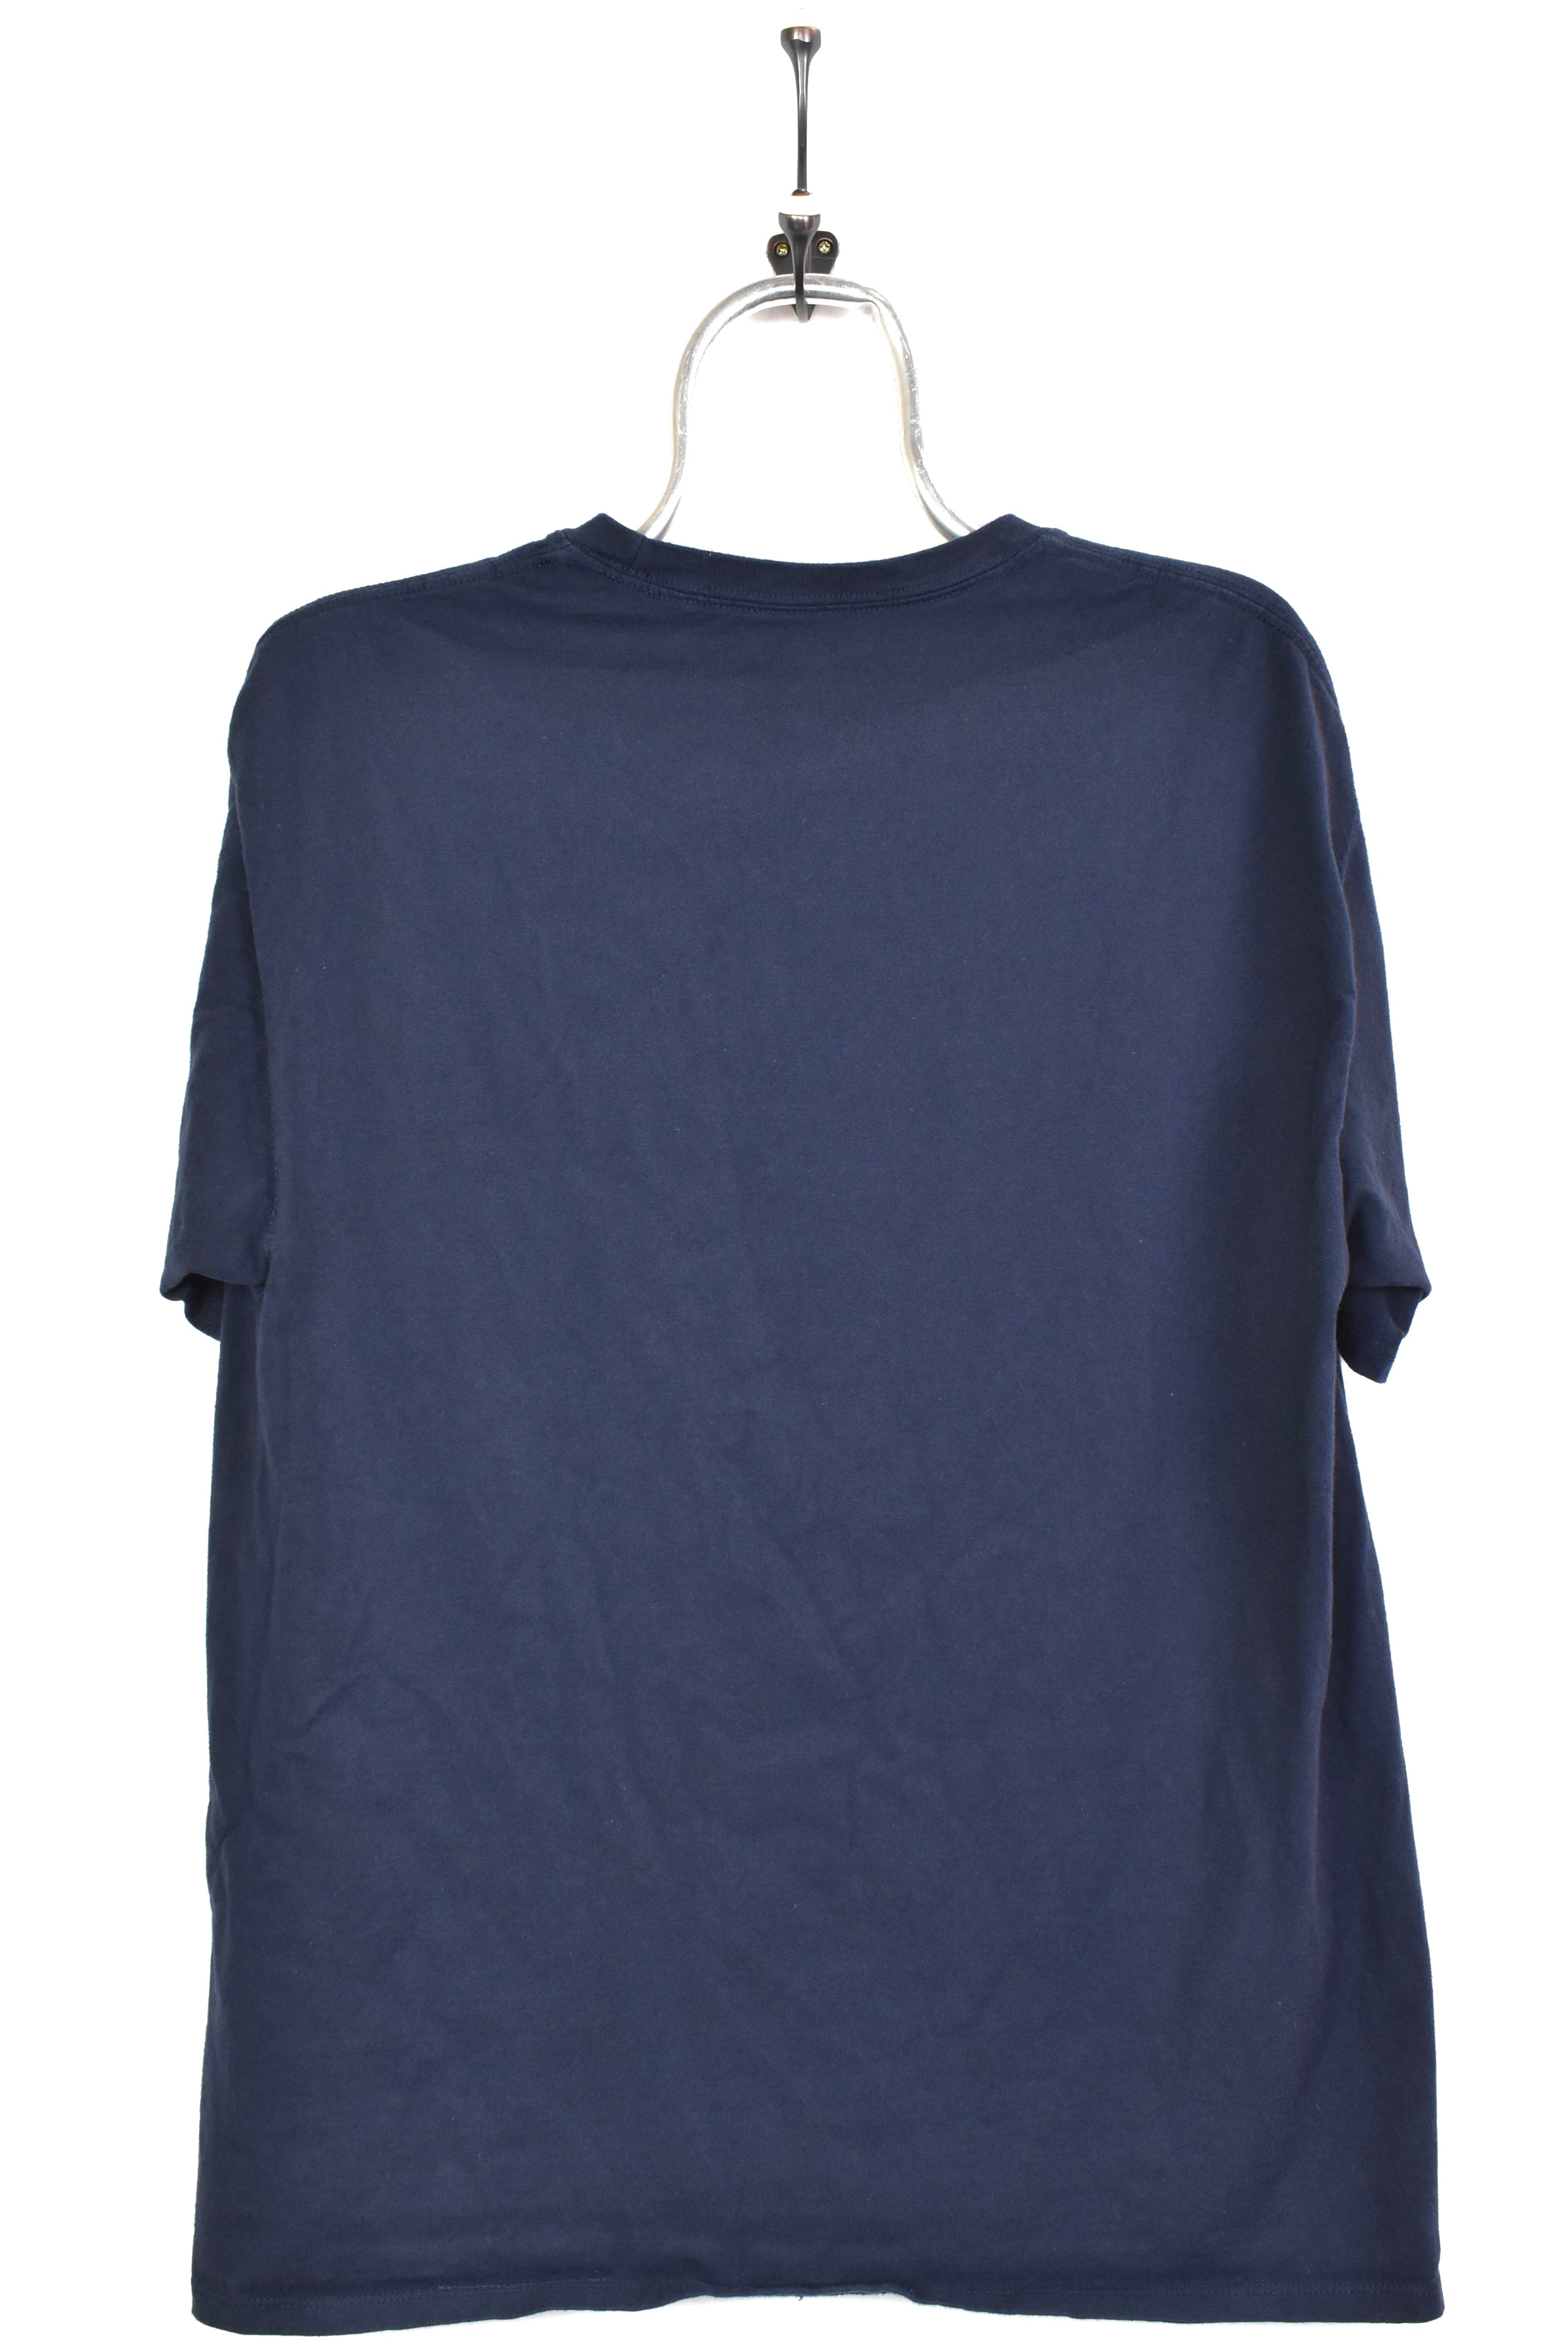 Modern Champion shirt, short sleeve graphic tee - medium, navy blue CHAMPION